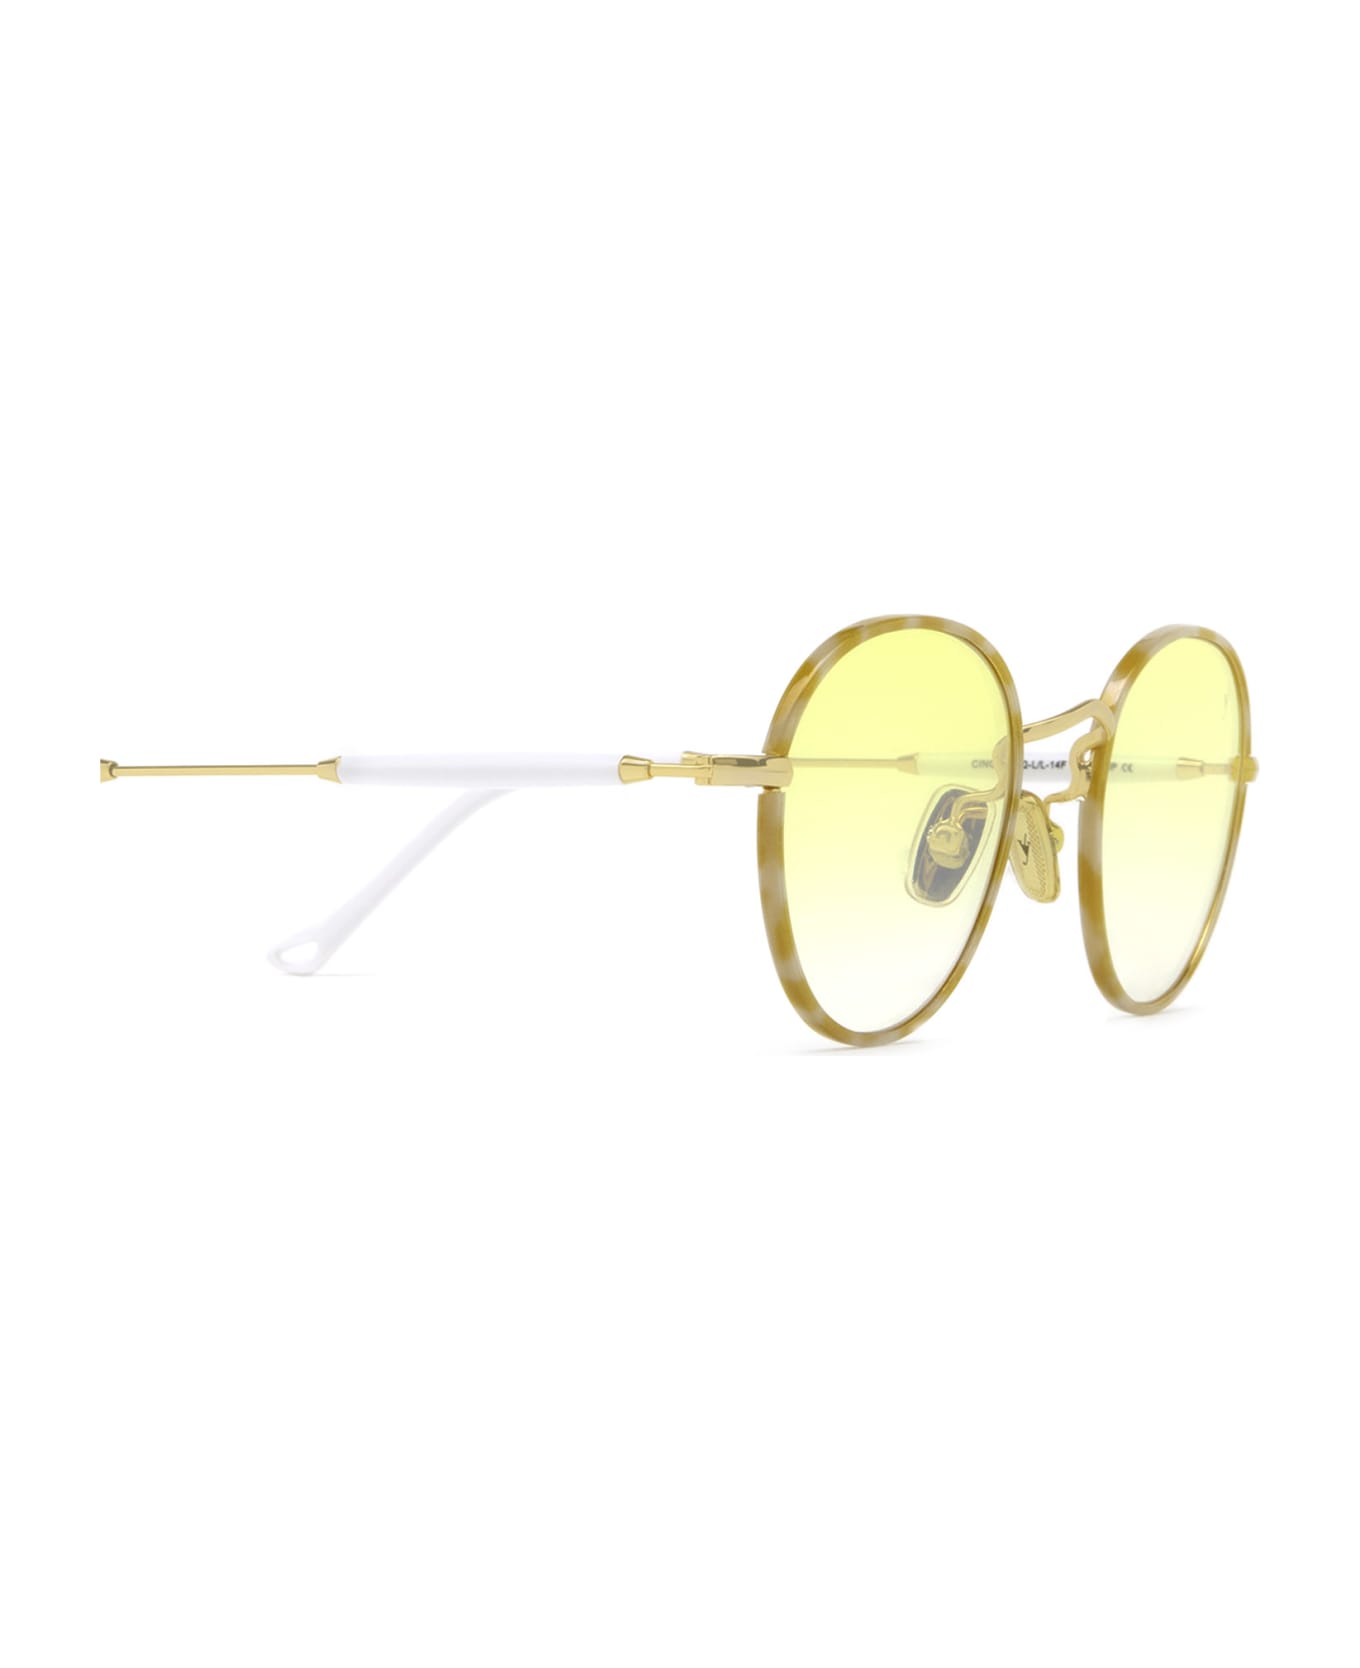 Eyepetizer Cinq Yellow Havana And Gold Sunglasses - Yellow Havana and Gold